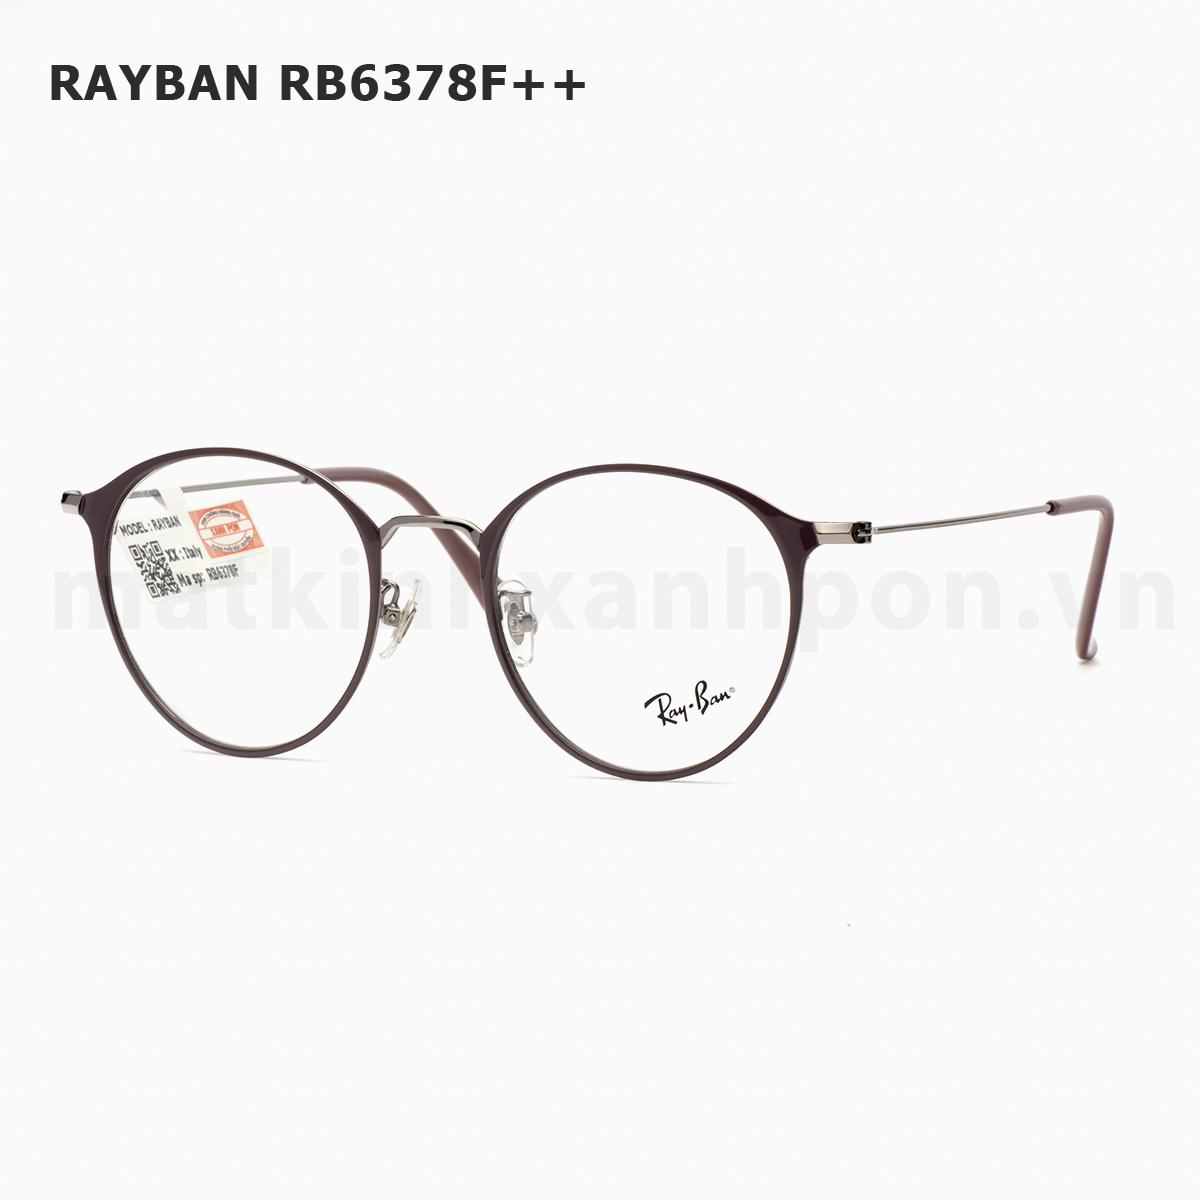 Rayban RB6378F